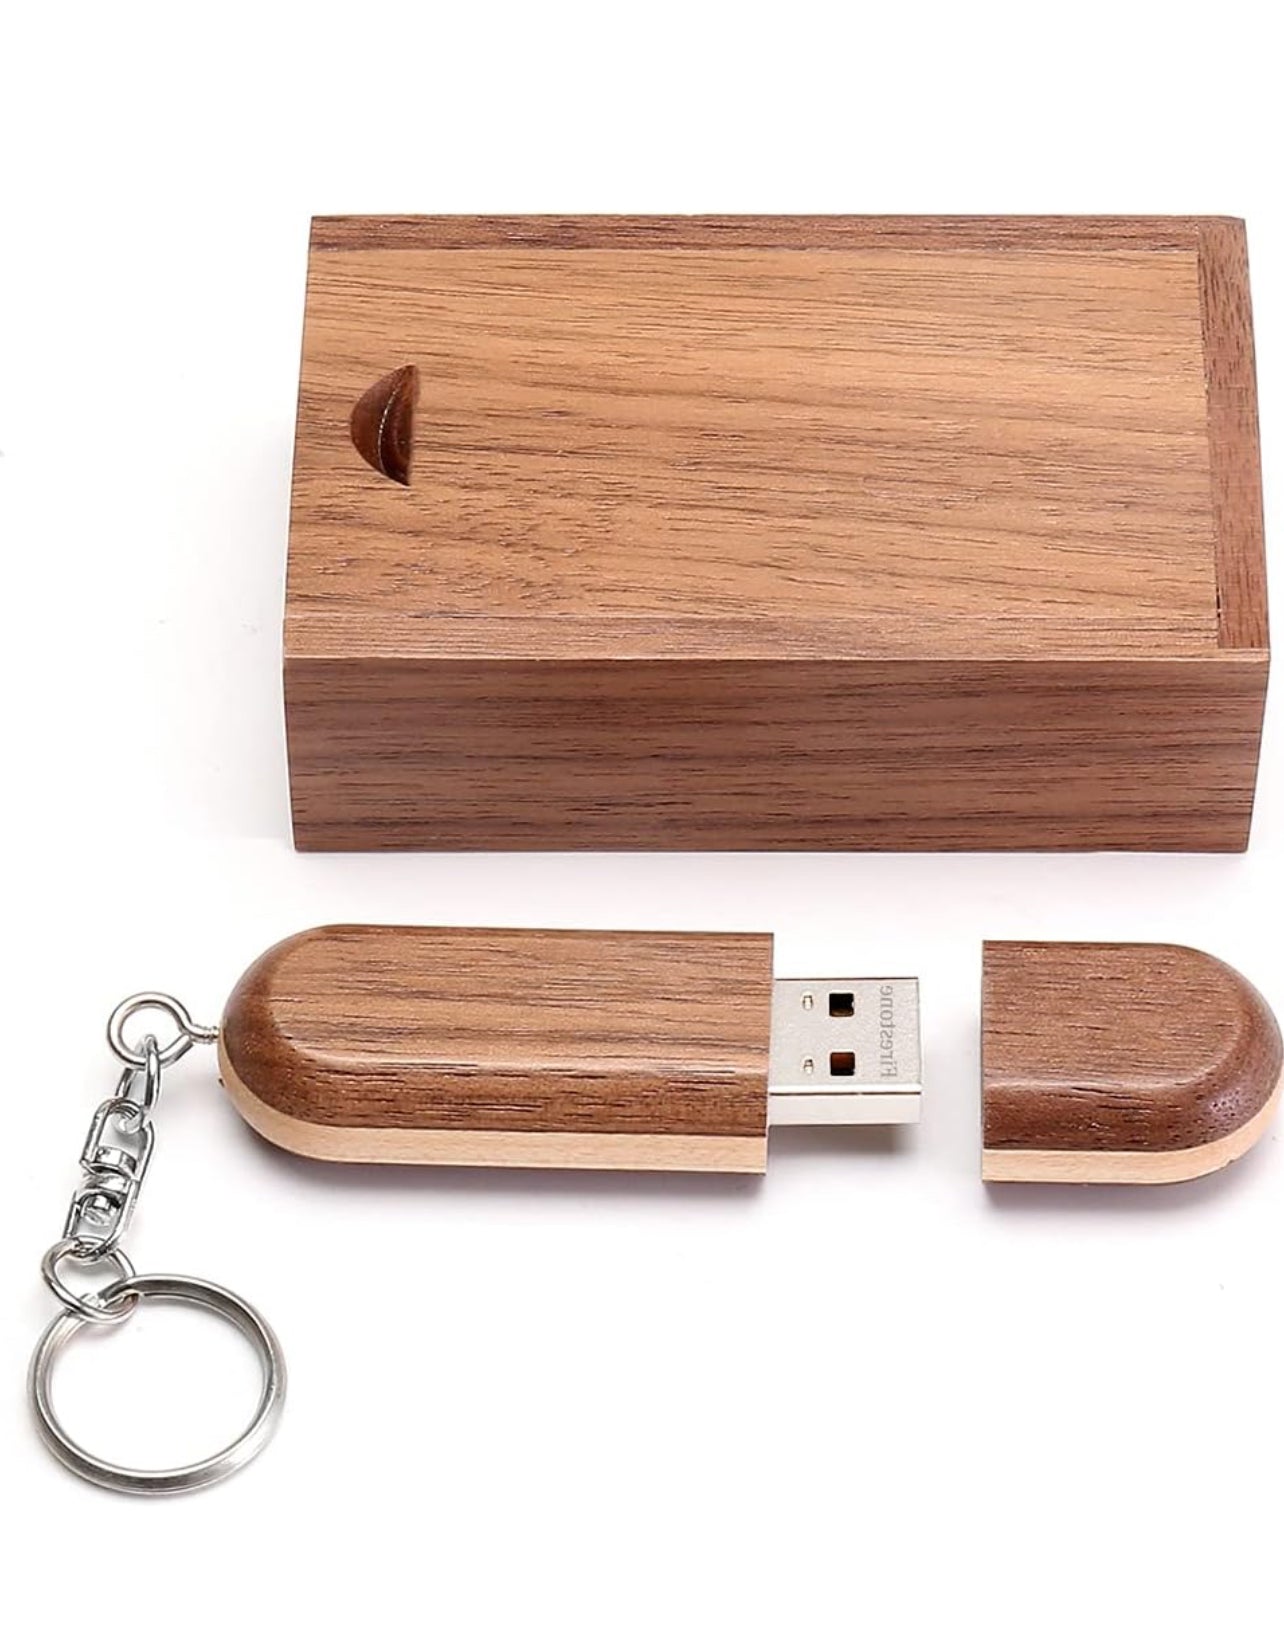 64GB Wooden USB